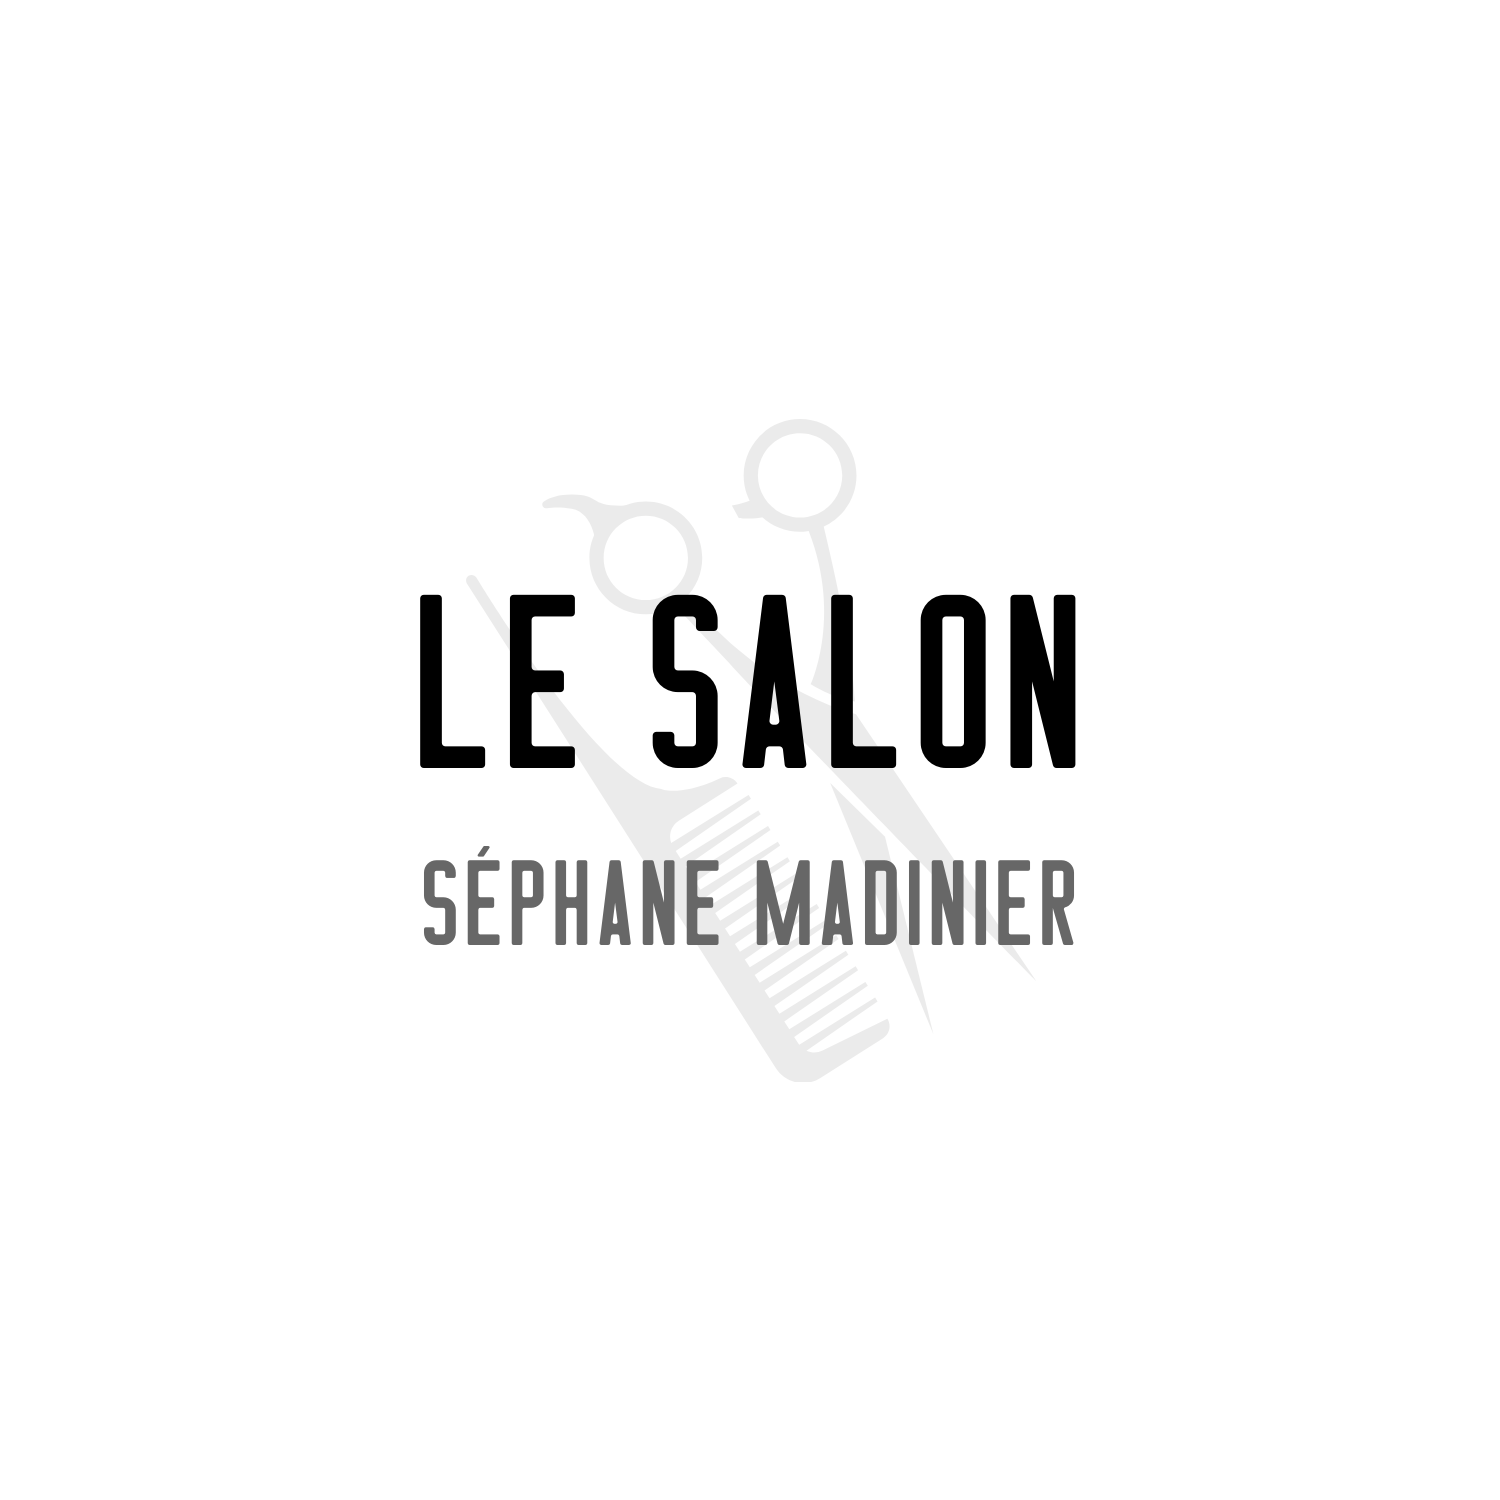 Read more about the article Le Salon